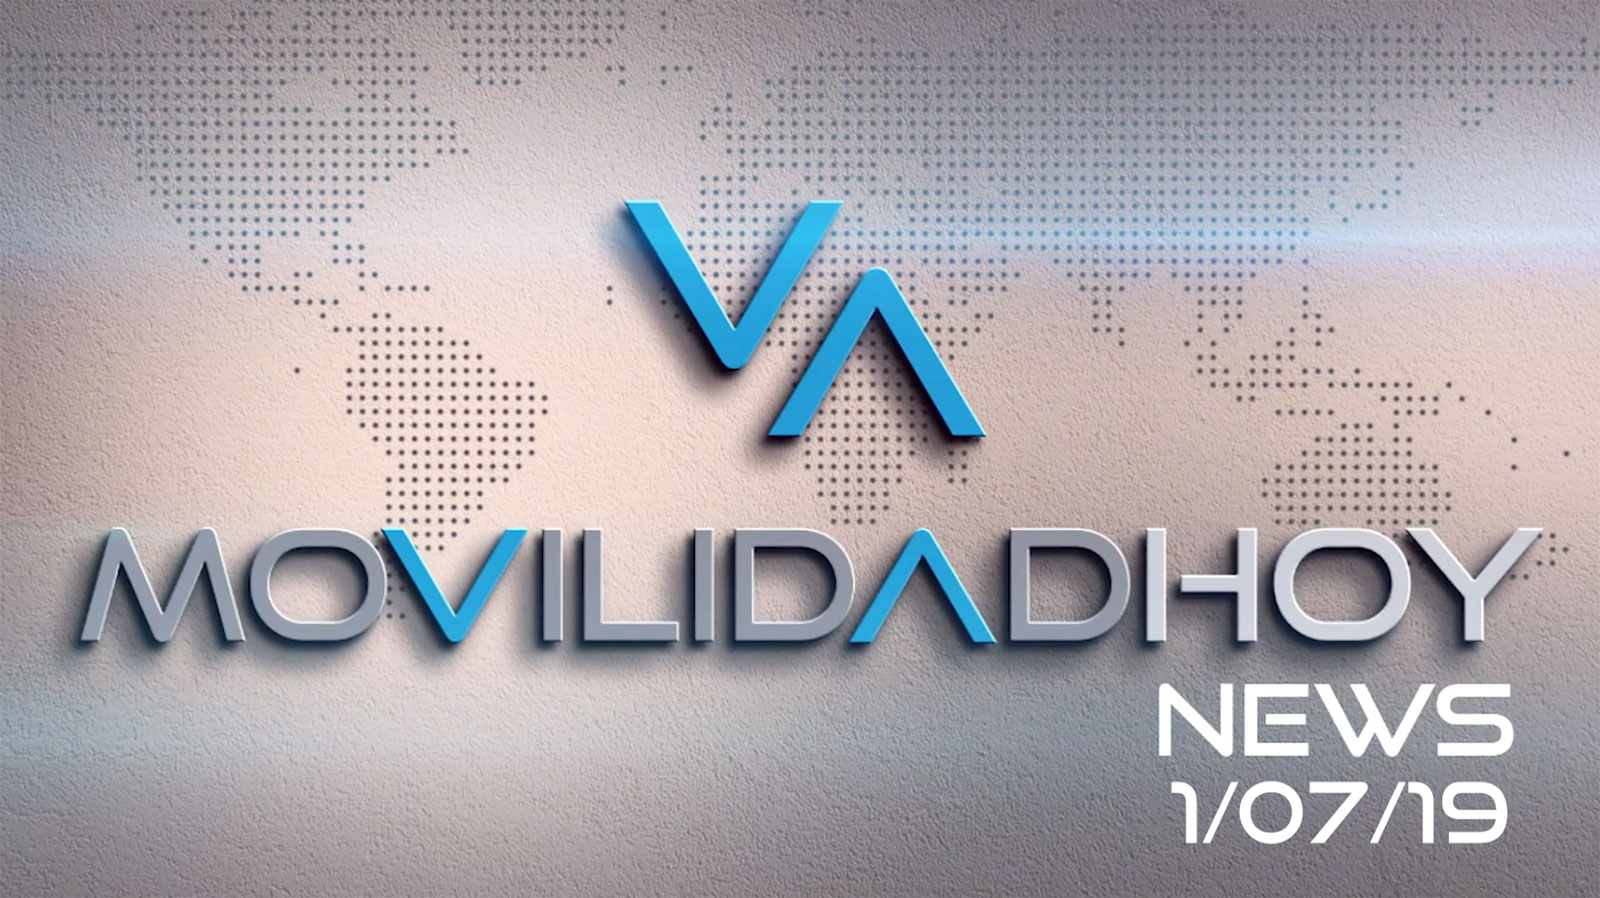 MovilidadHoy News - Renault ZOE